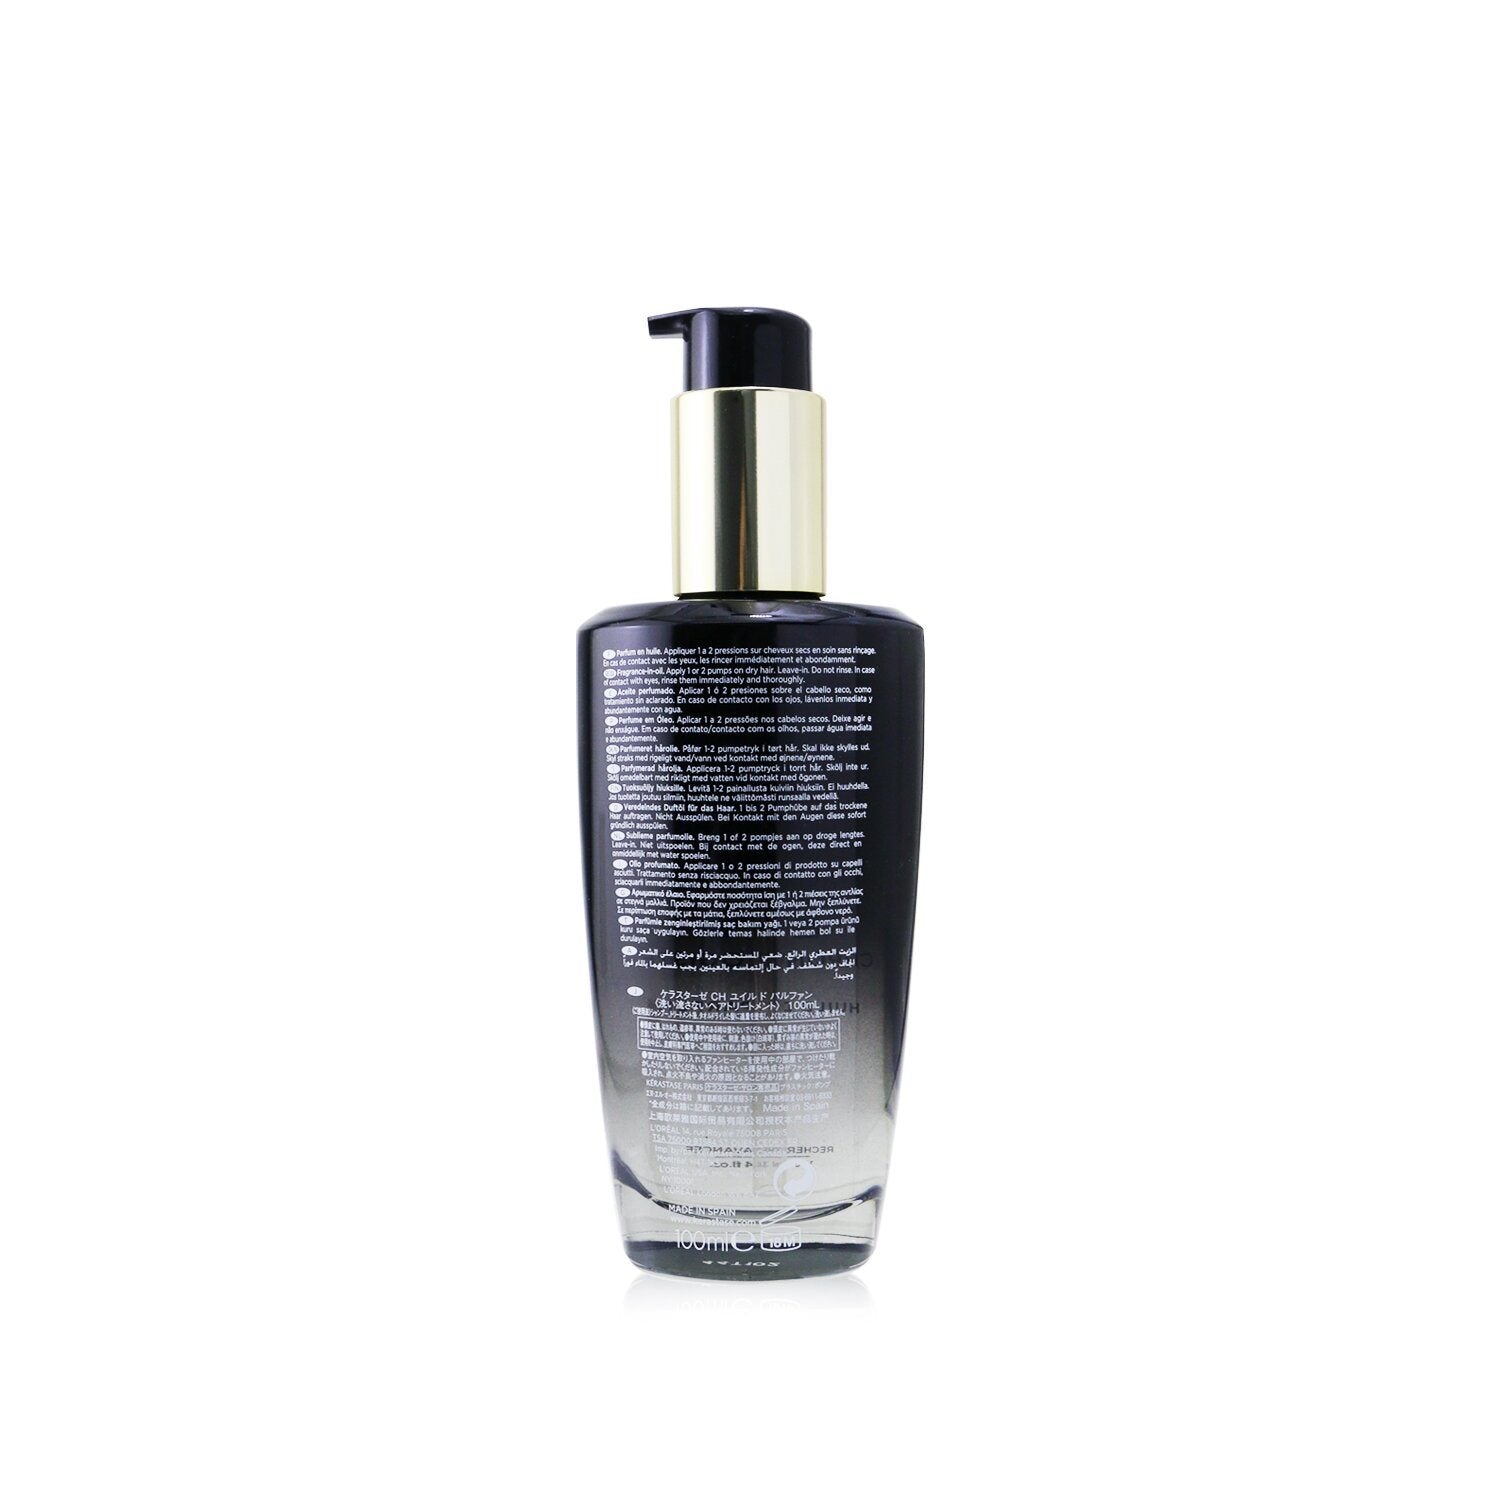 KERASTASE - Chronologiste Huile De Parfum Fragrance-In-Oil (Length and Ends) 100ml/3.4oz 3P's Inclusive Beauty